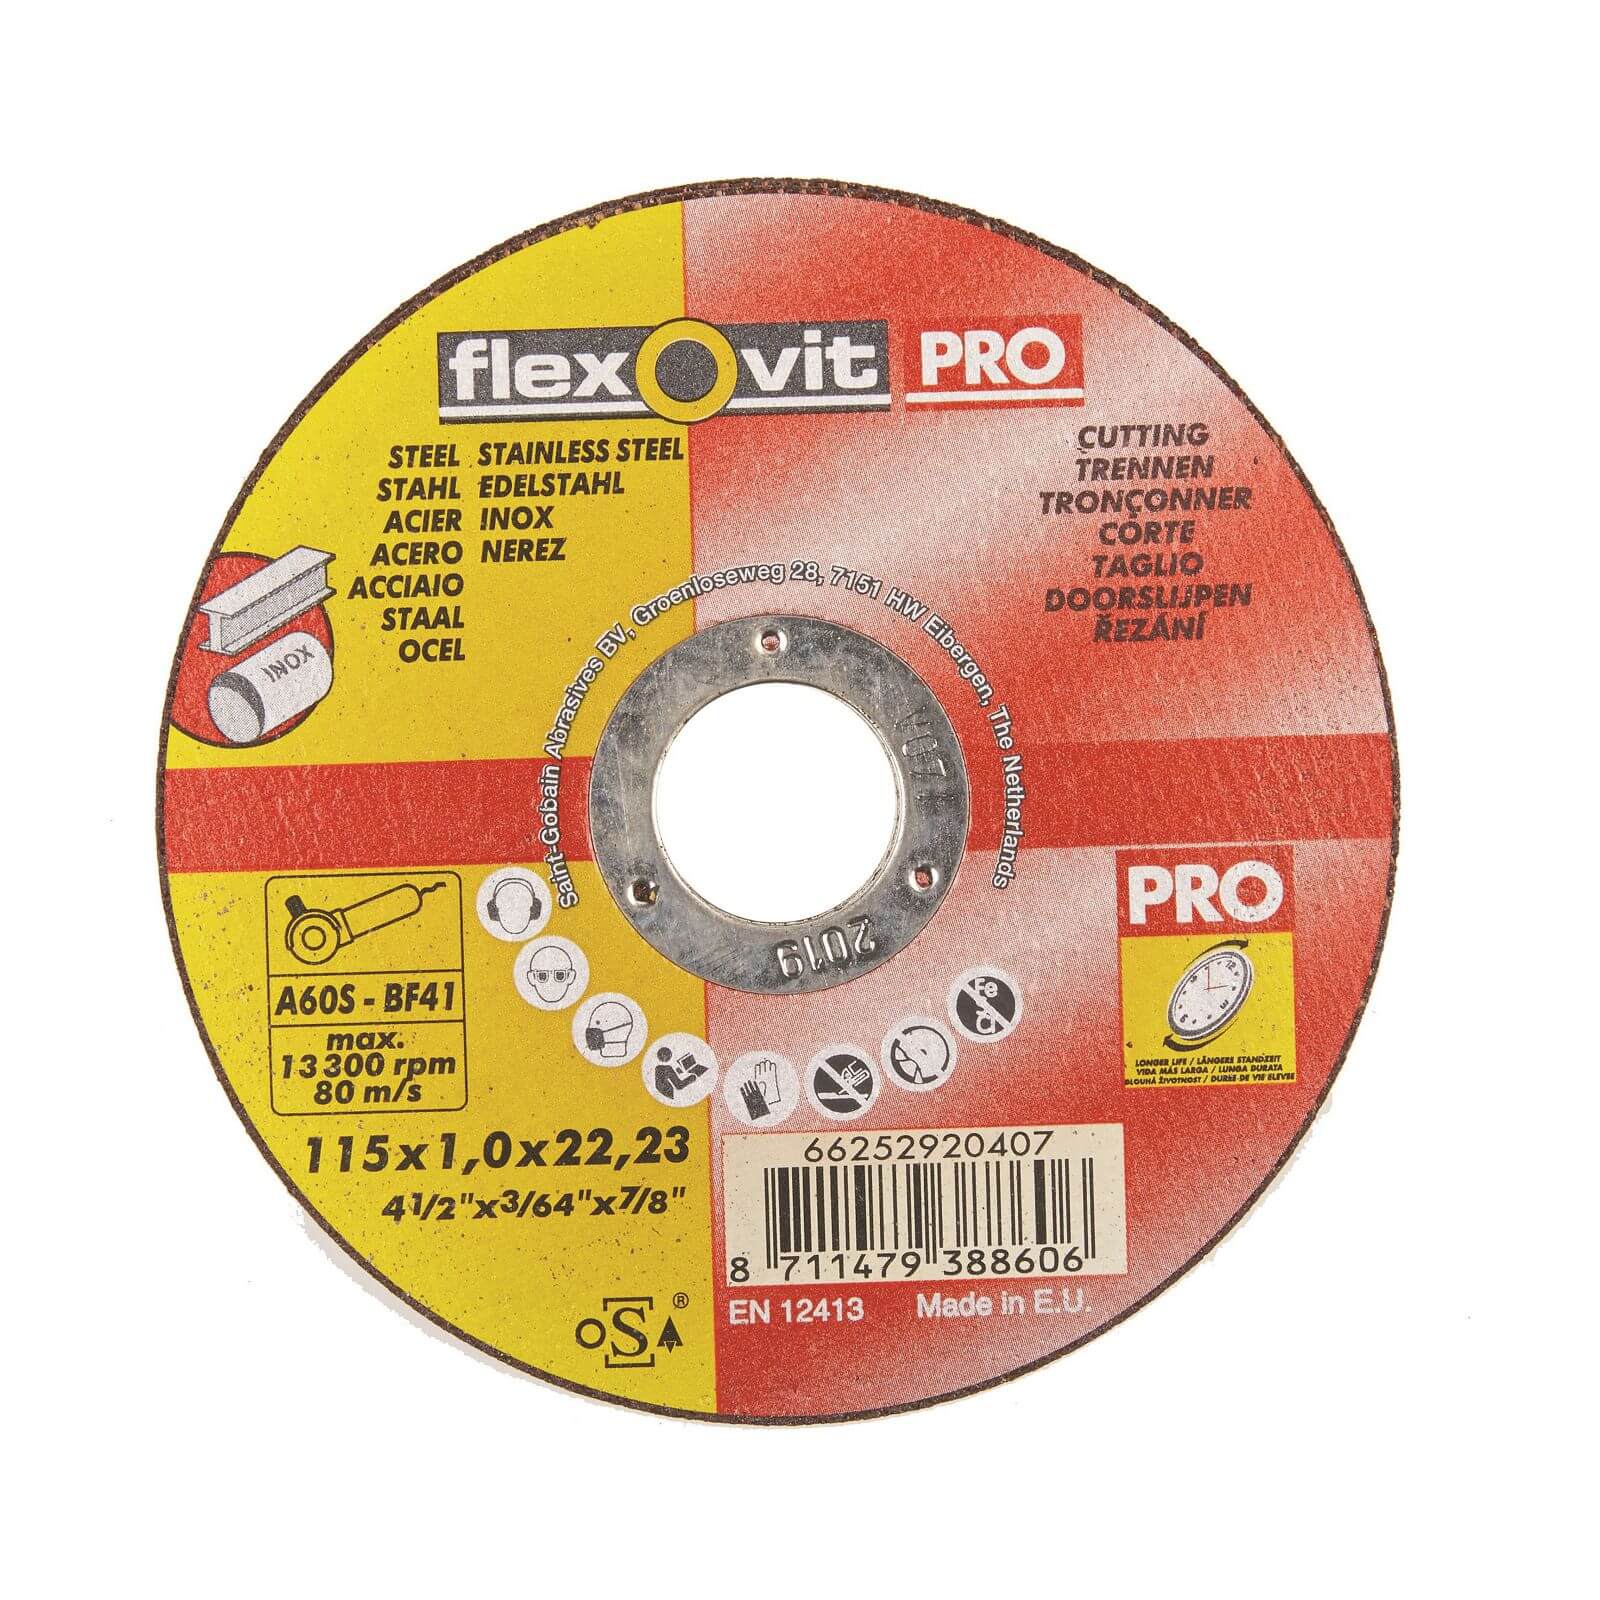 Flexovit PRO Steel Inox Cutting Off Wheel - 115mm - 5 Pack